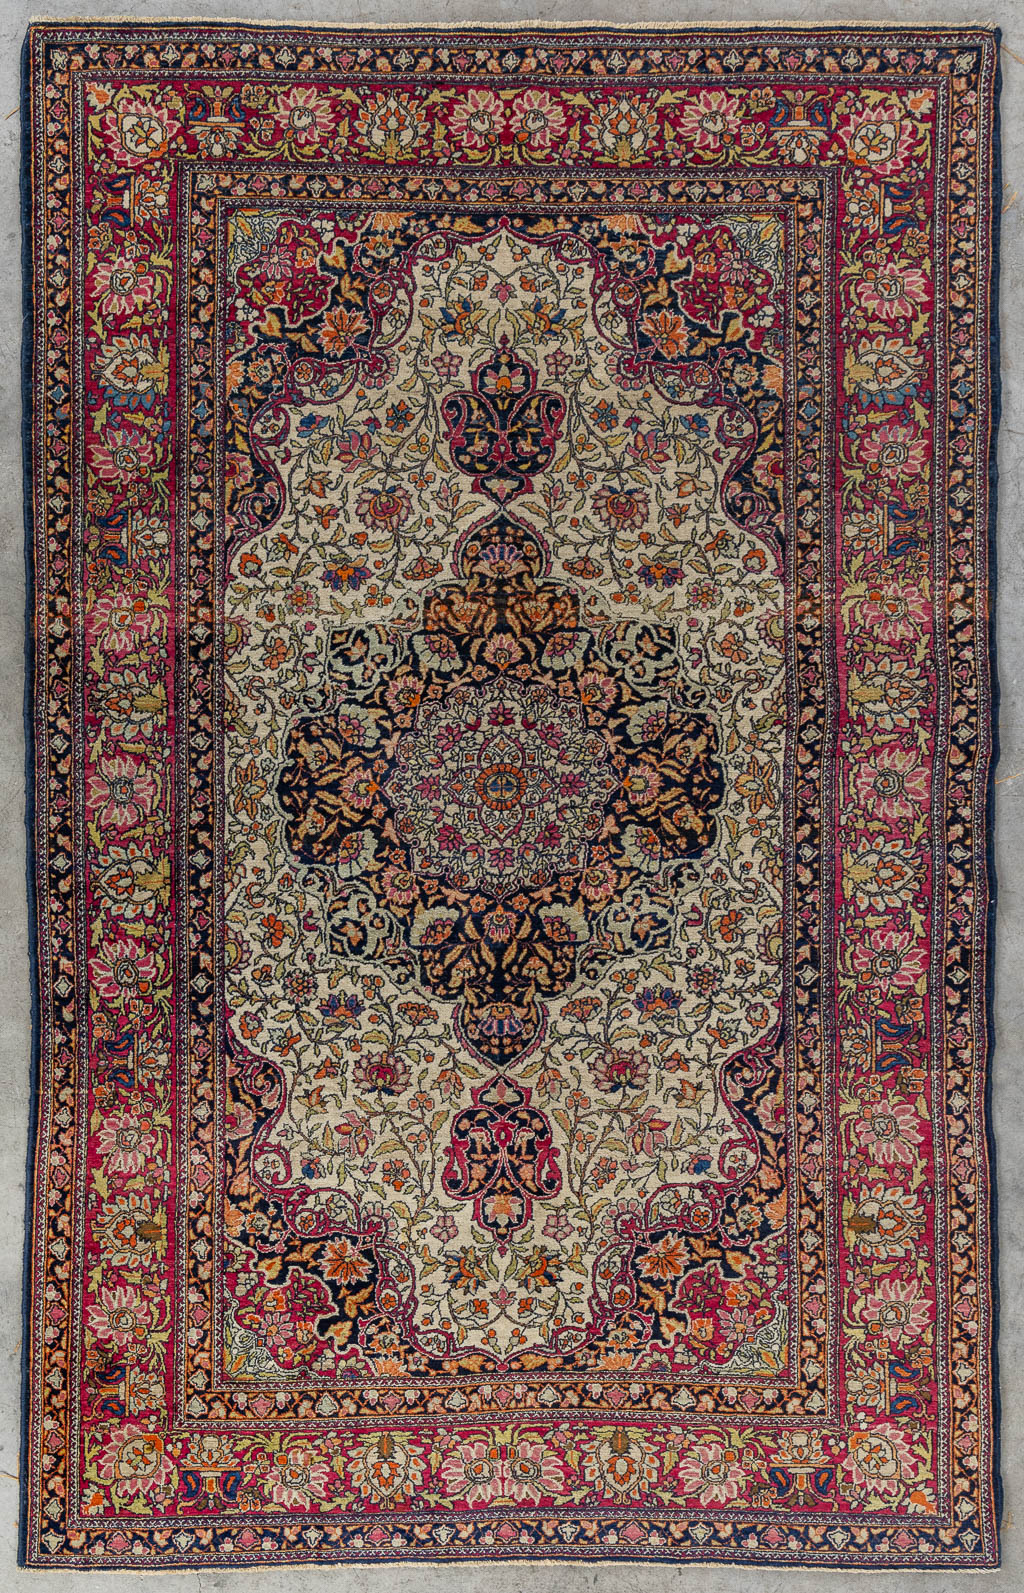  An Oriental hand-made carpet, Isfahan/Isphahan